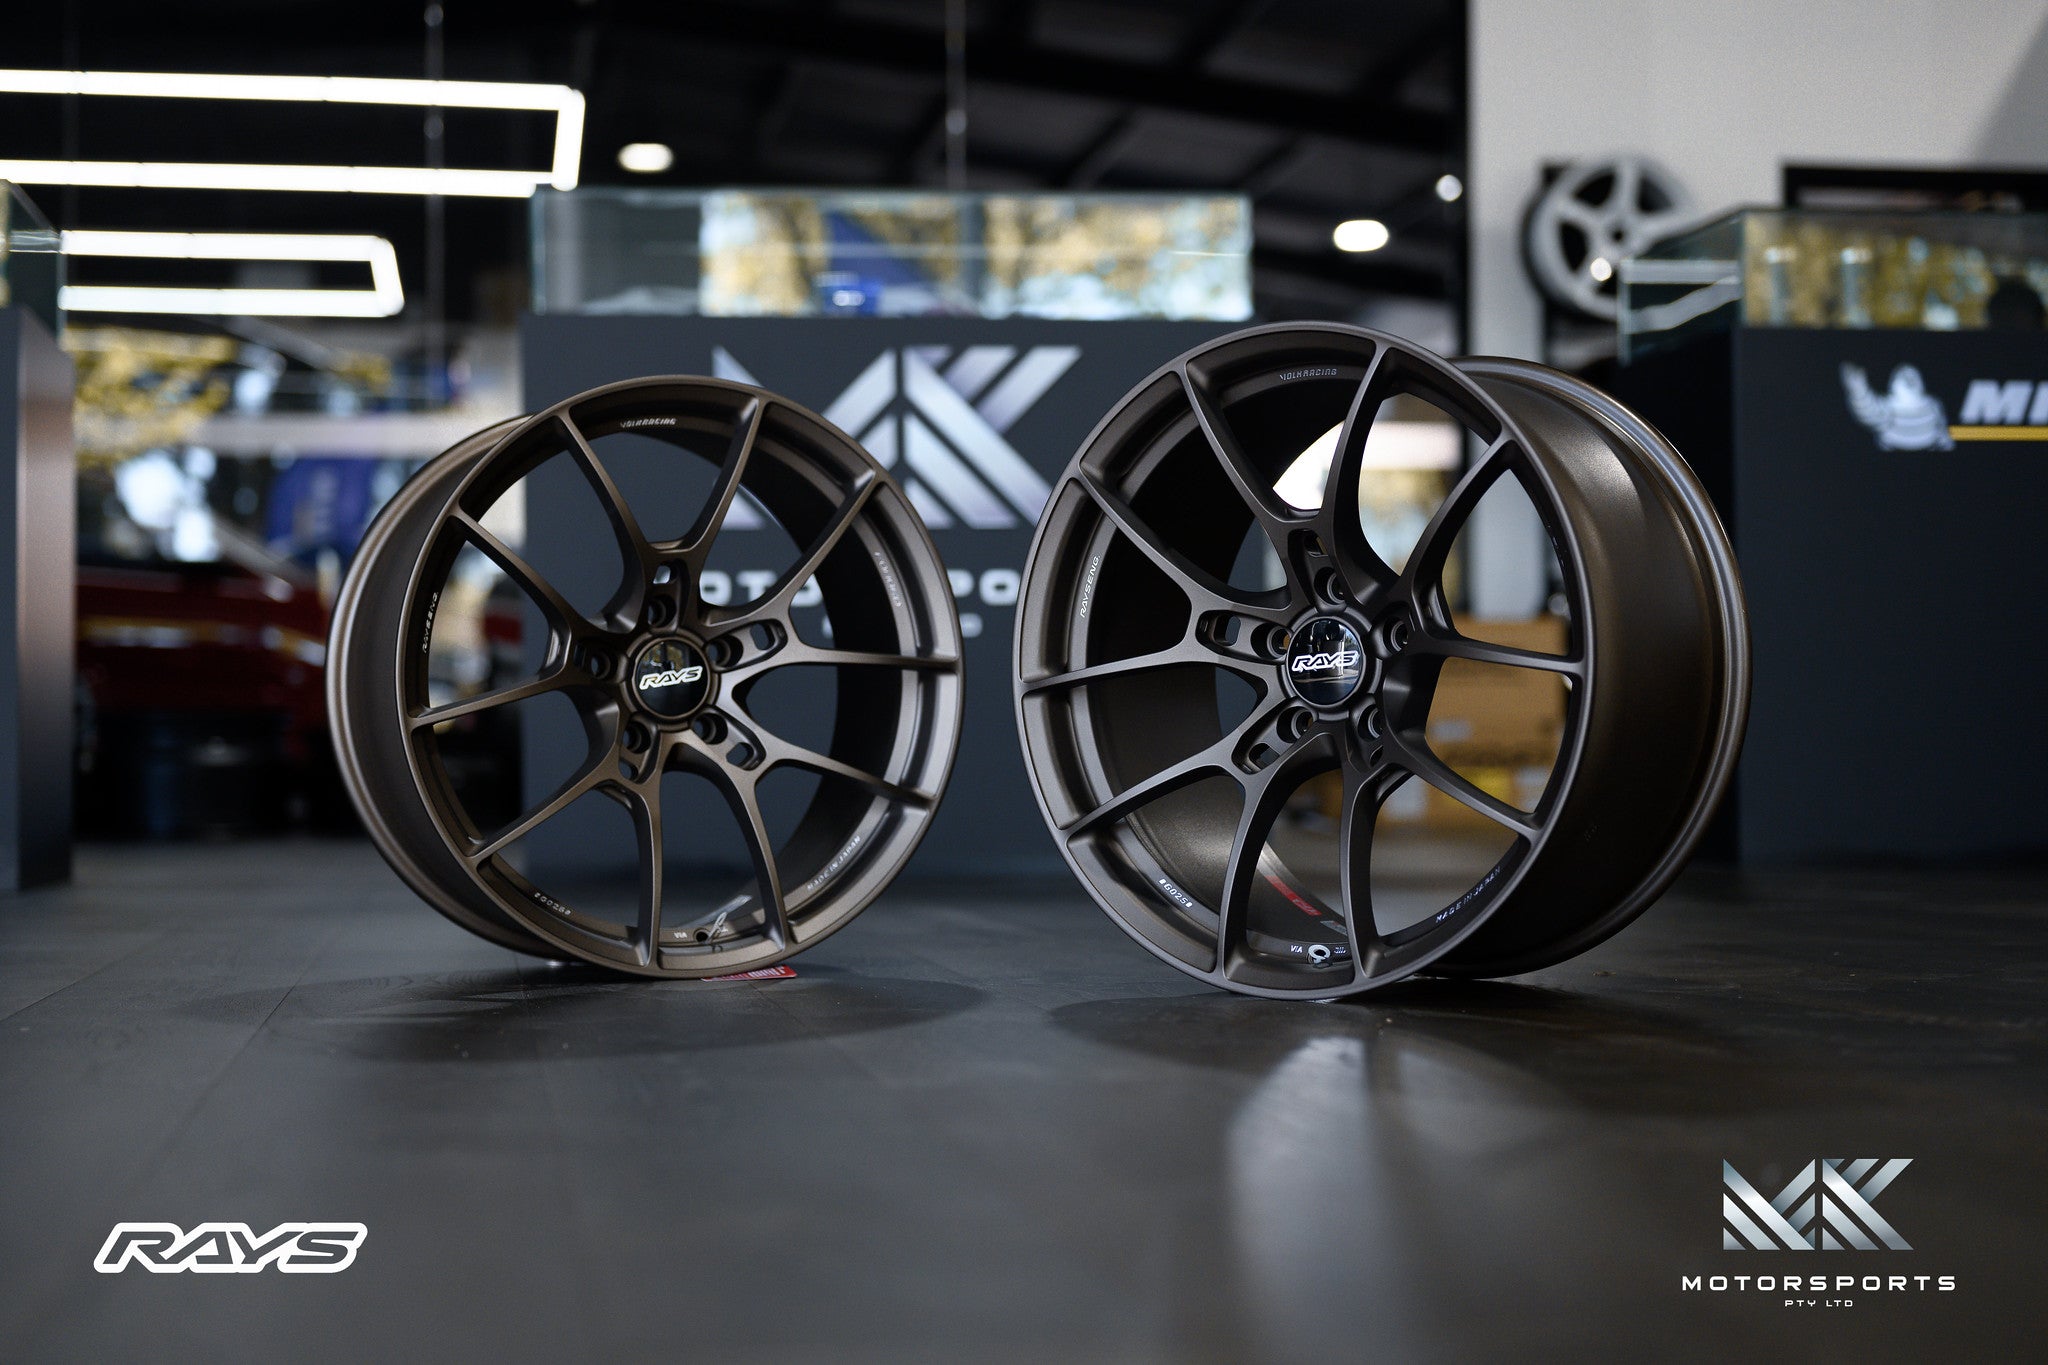 Volk Racing G025 - Premium Wheels from Volk Racing - From just $4590.00! Shop now at MK MOTORSPORTS